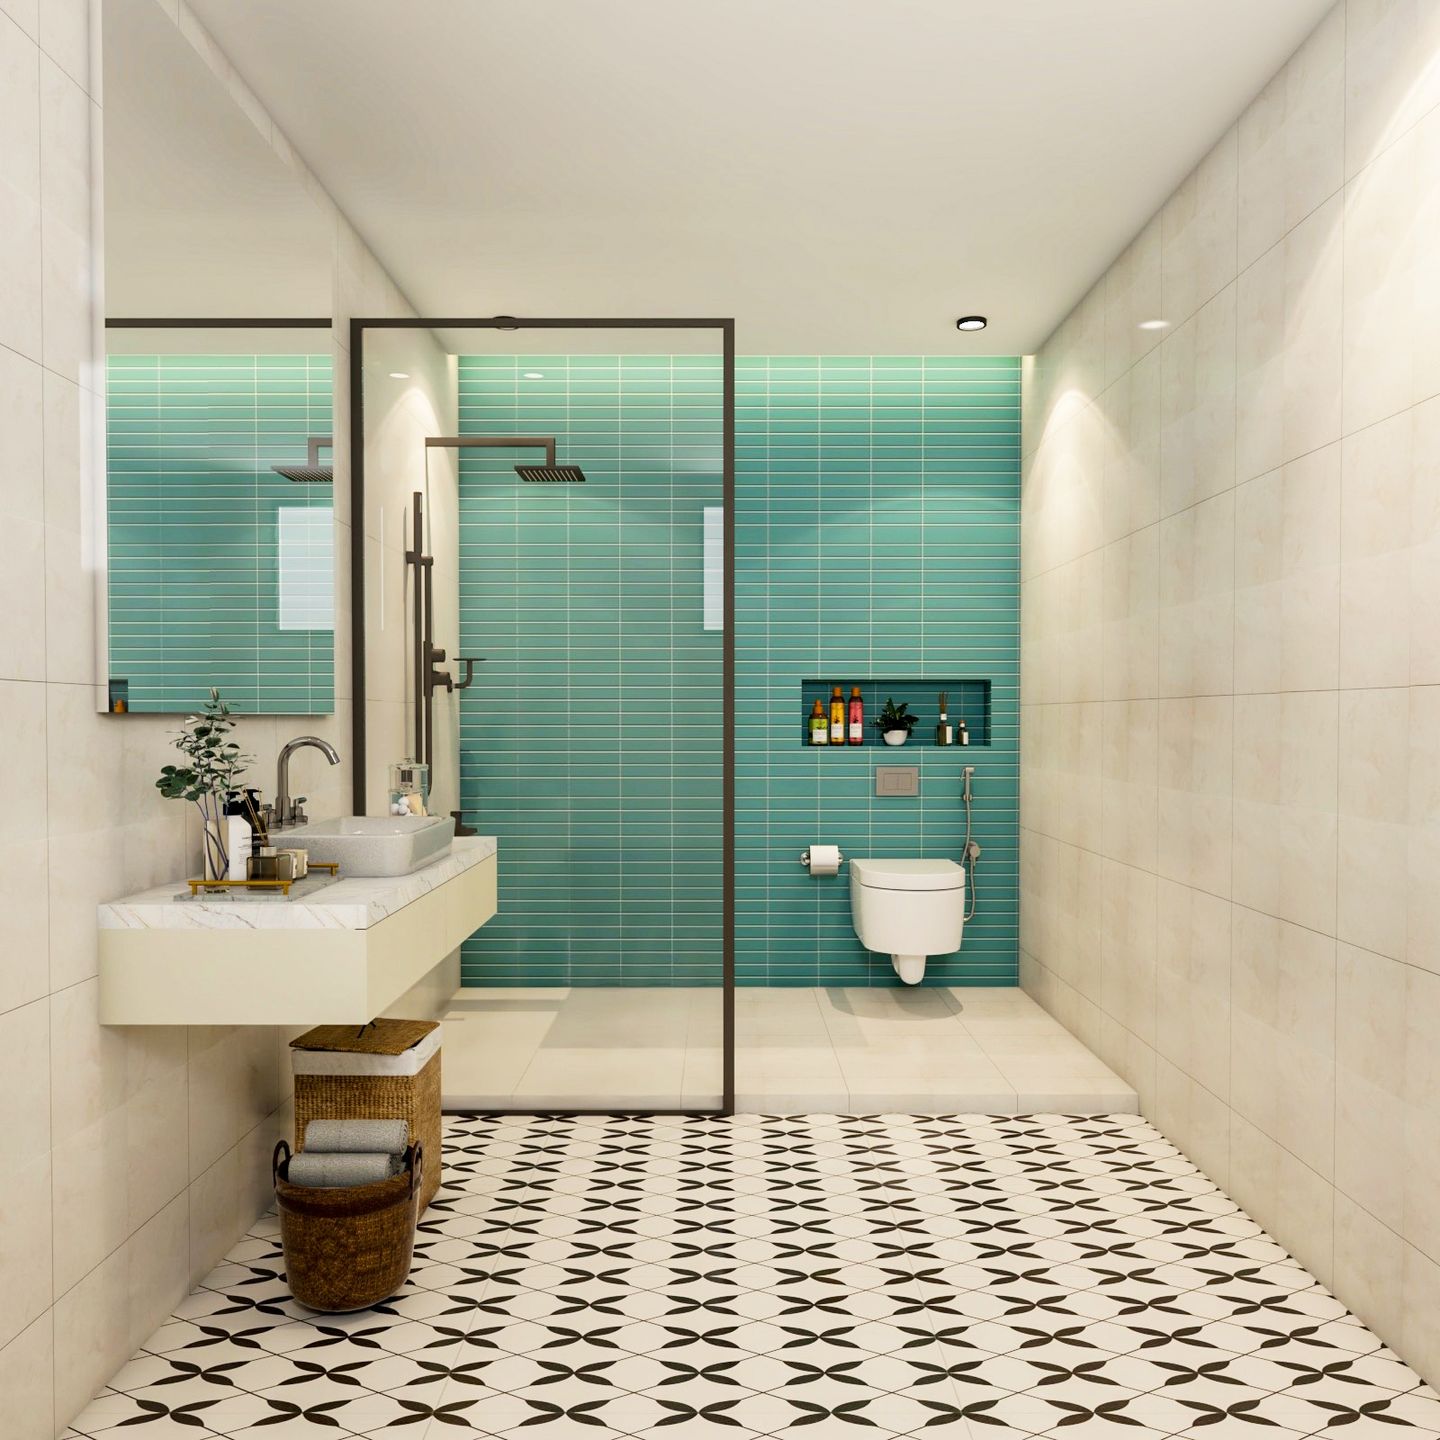 Bathroom Design With Blue And Cream Tiles - Livspace